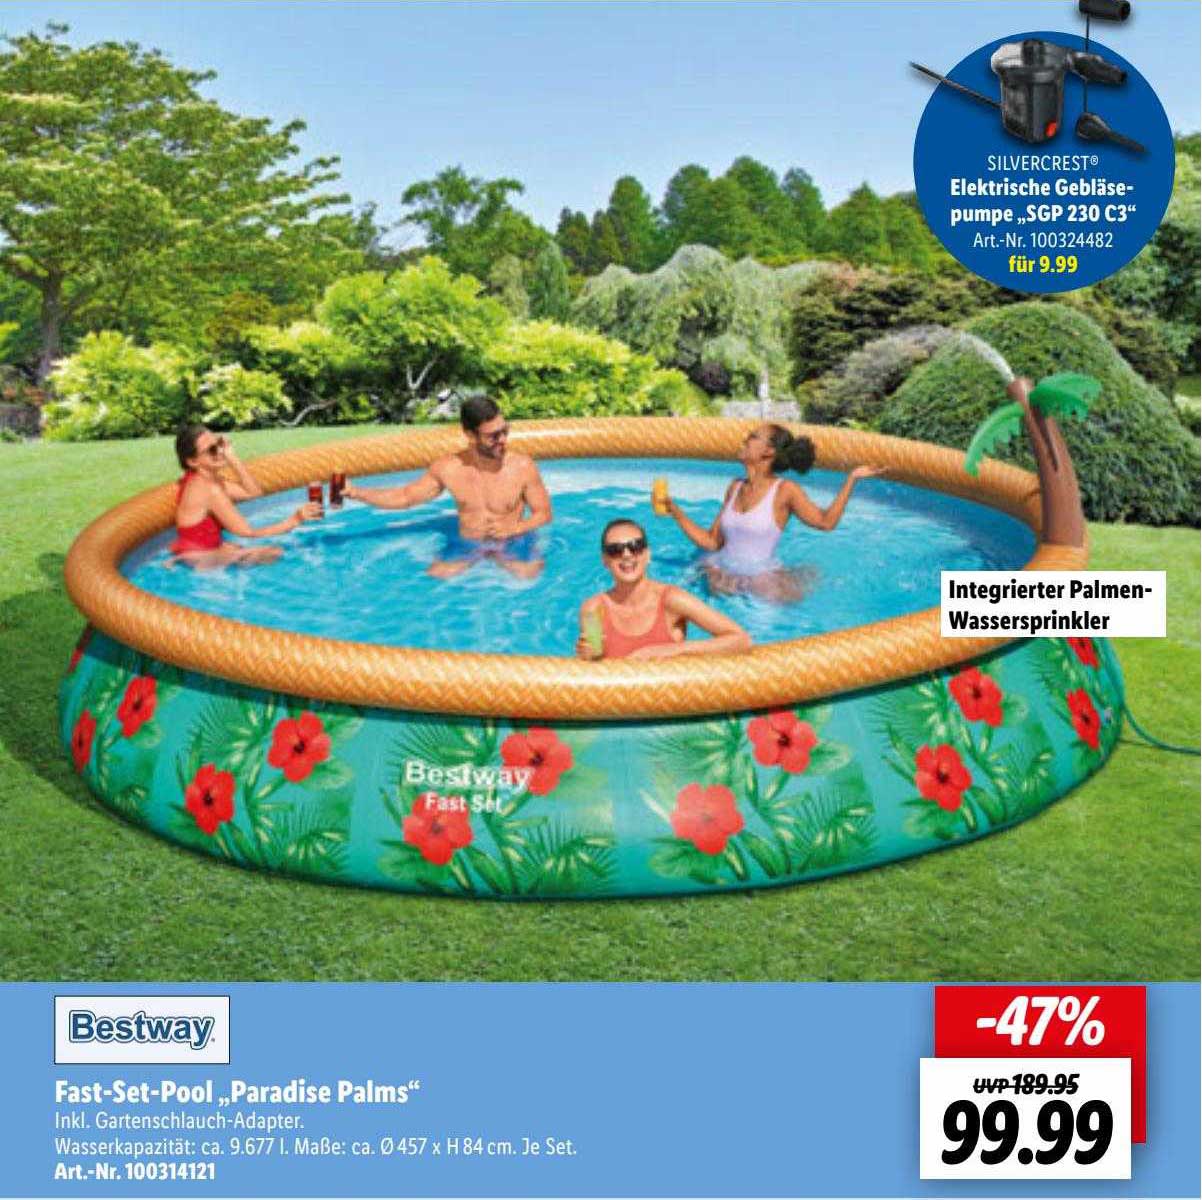 Bestway Fast-set-pool „paradise Palms” Angebot bei Lidl | Swimmingpools